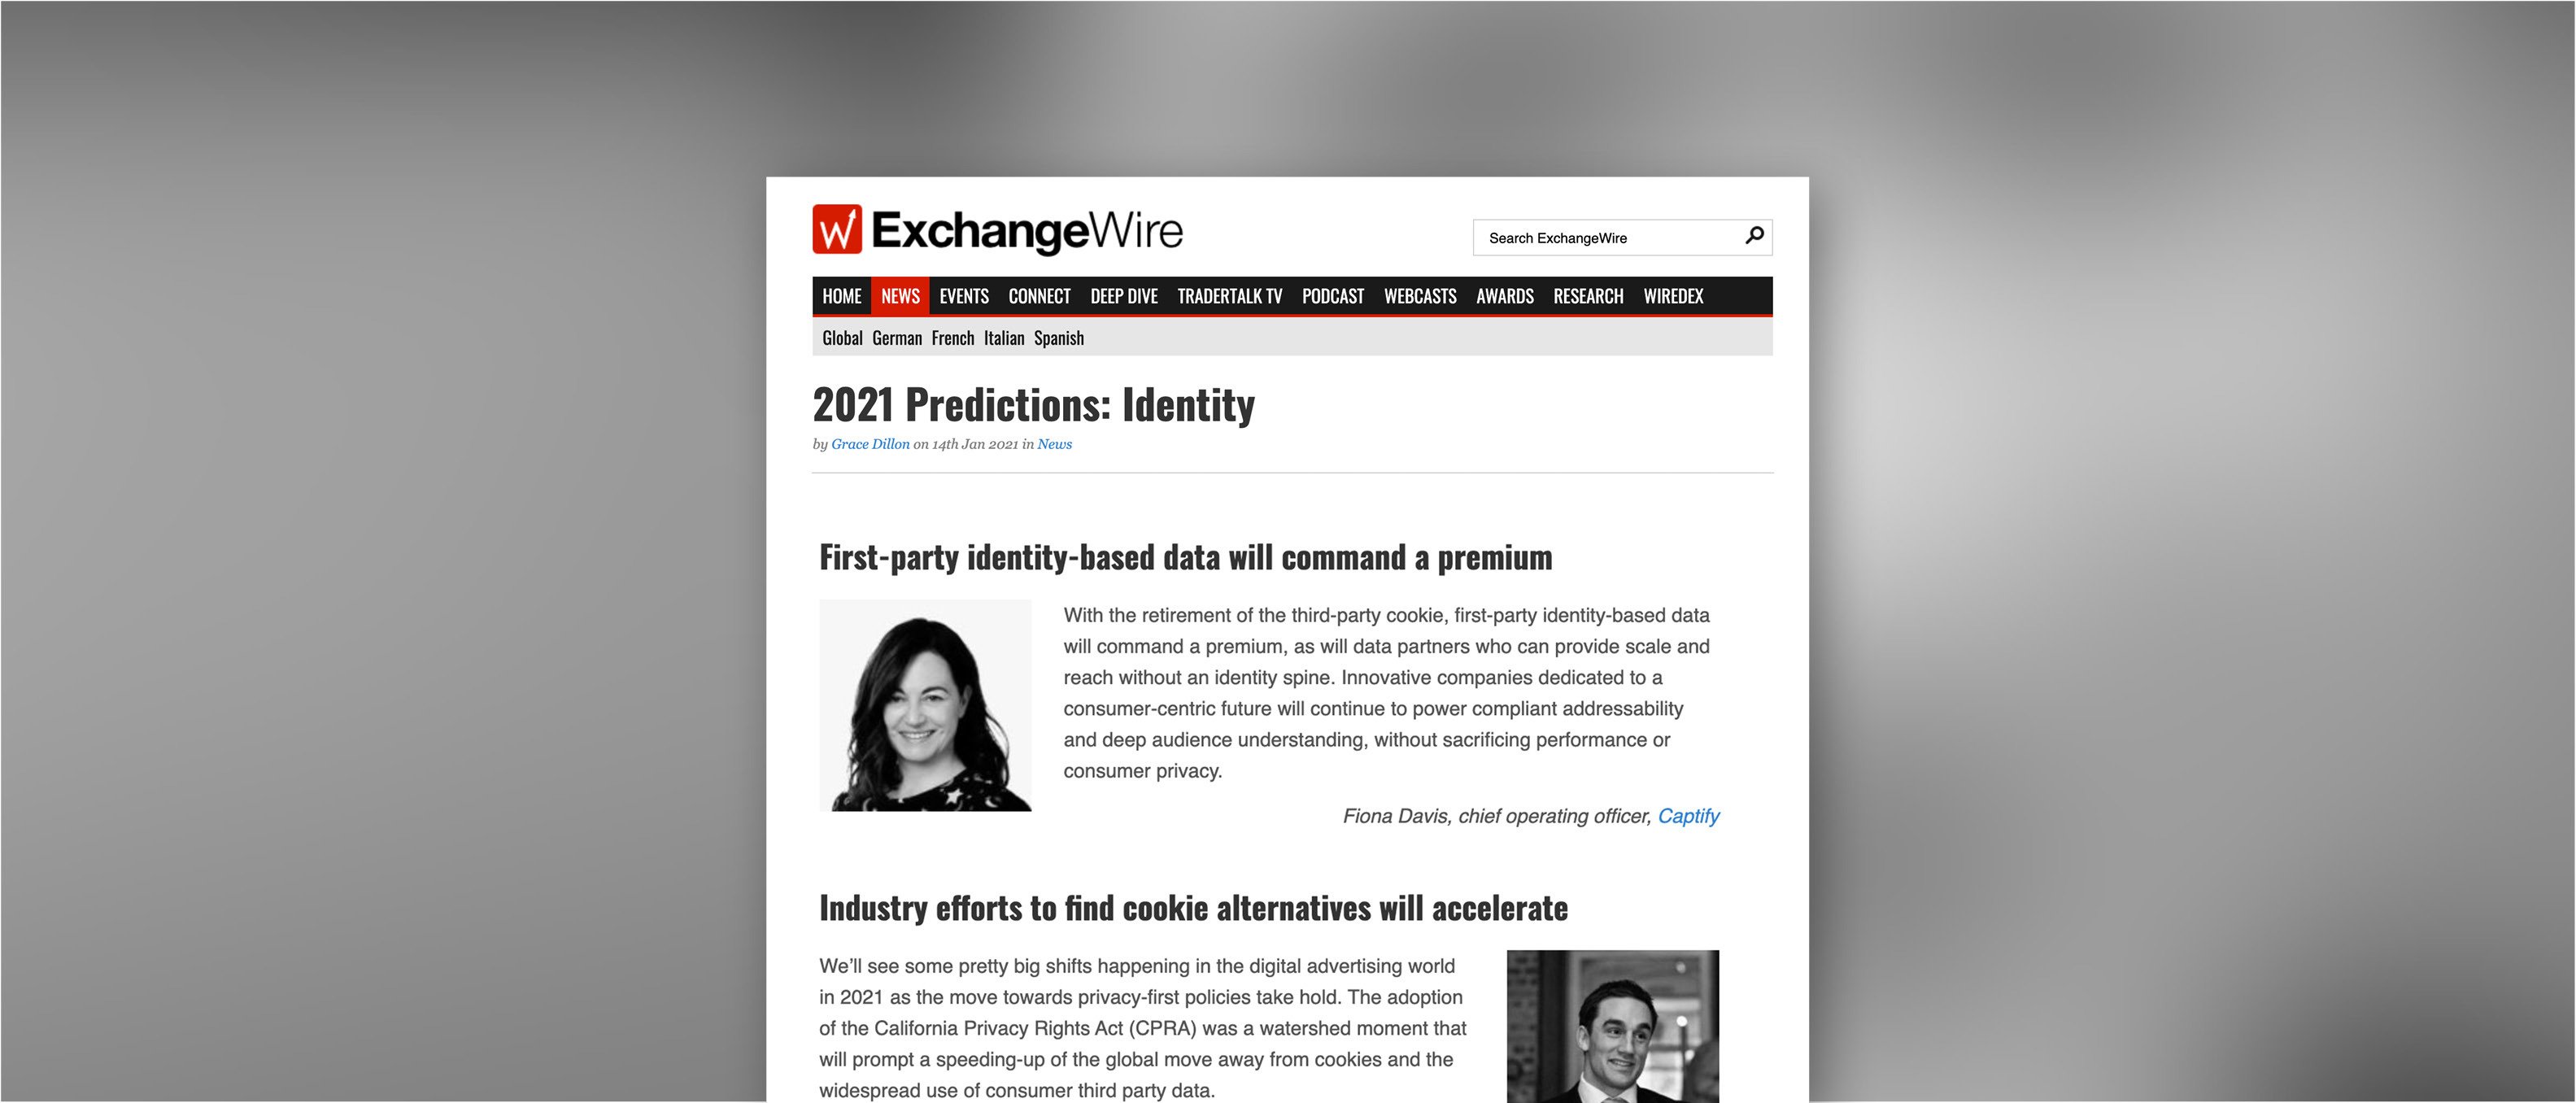 ExchangeWire: 2021 Predictions on Identity